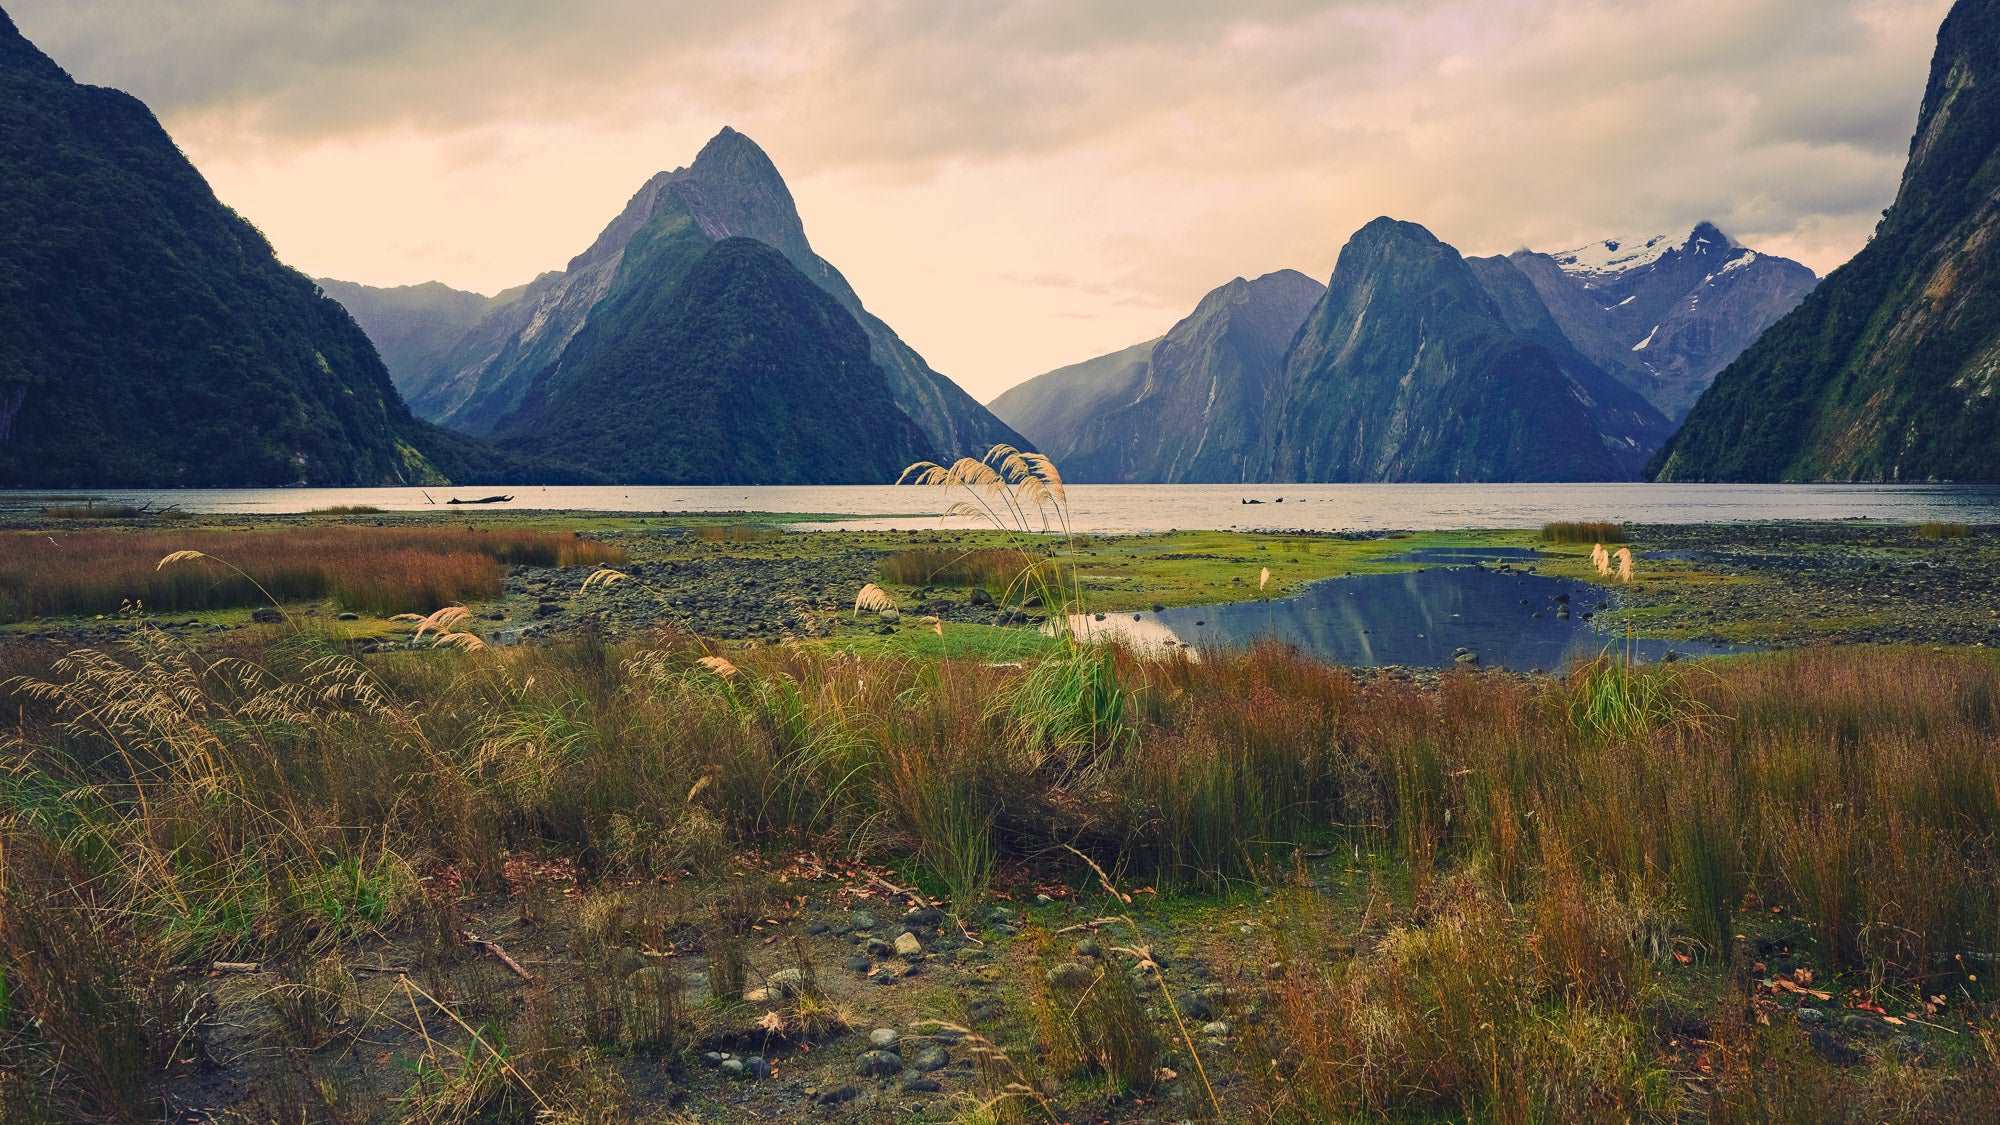 Majestic Mountains - Milford Sound - by Award Winning New Zealand Landscape Photographer Stephen Milner